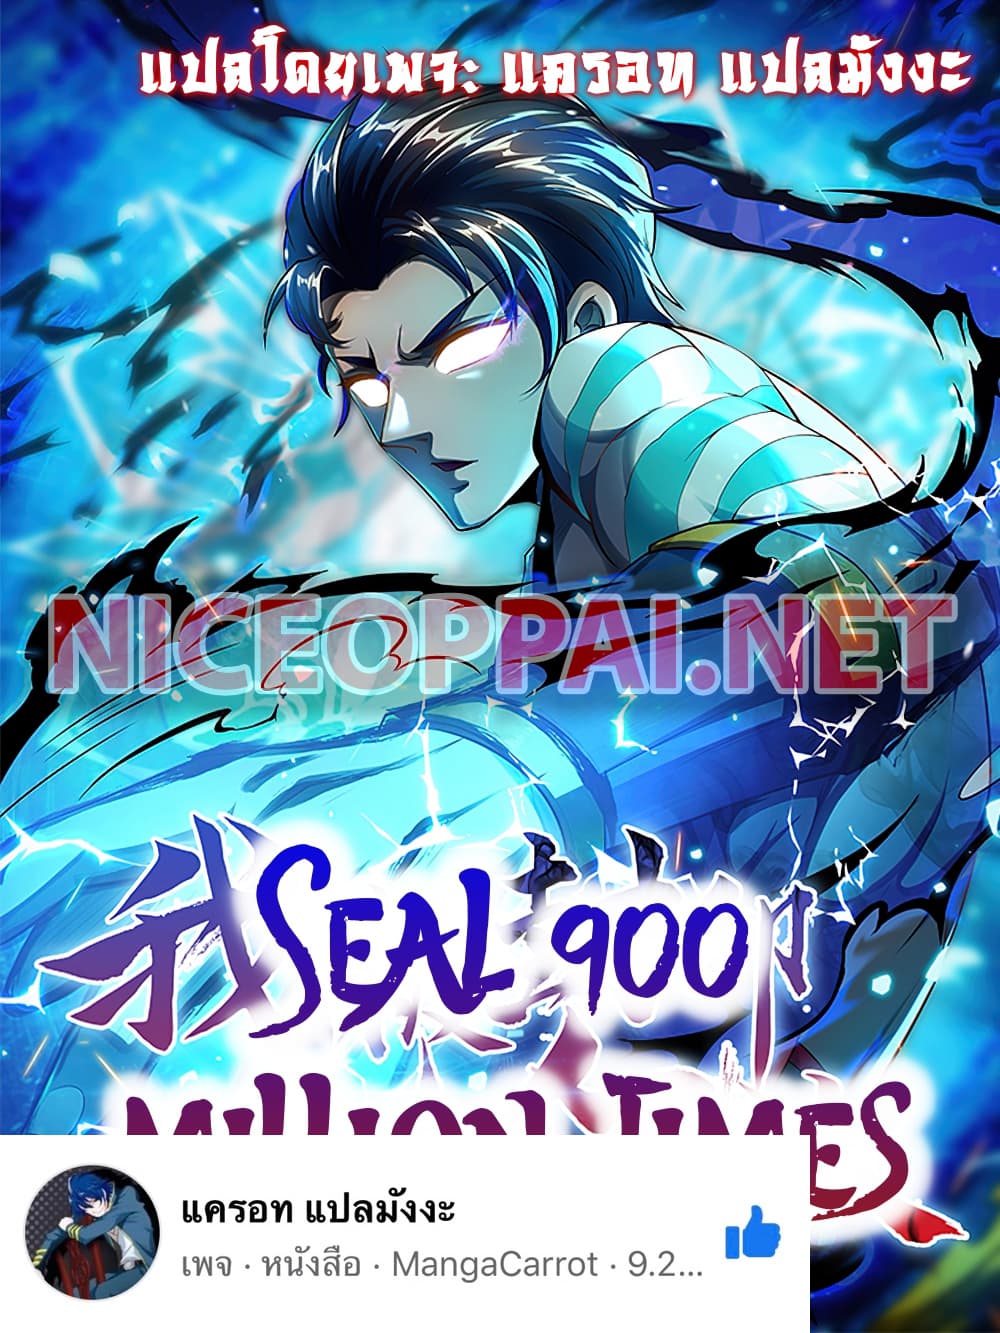 Seal900MillionTimes 8 (1)